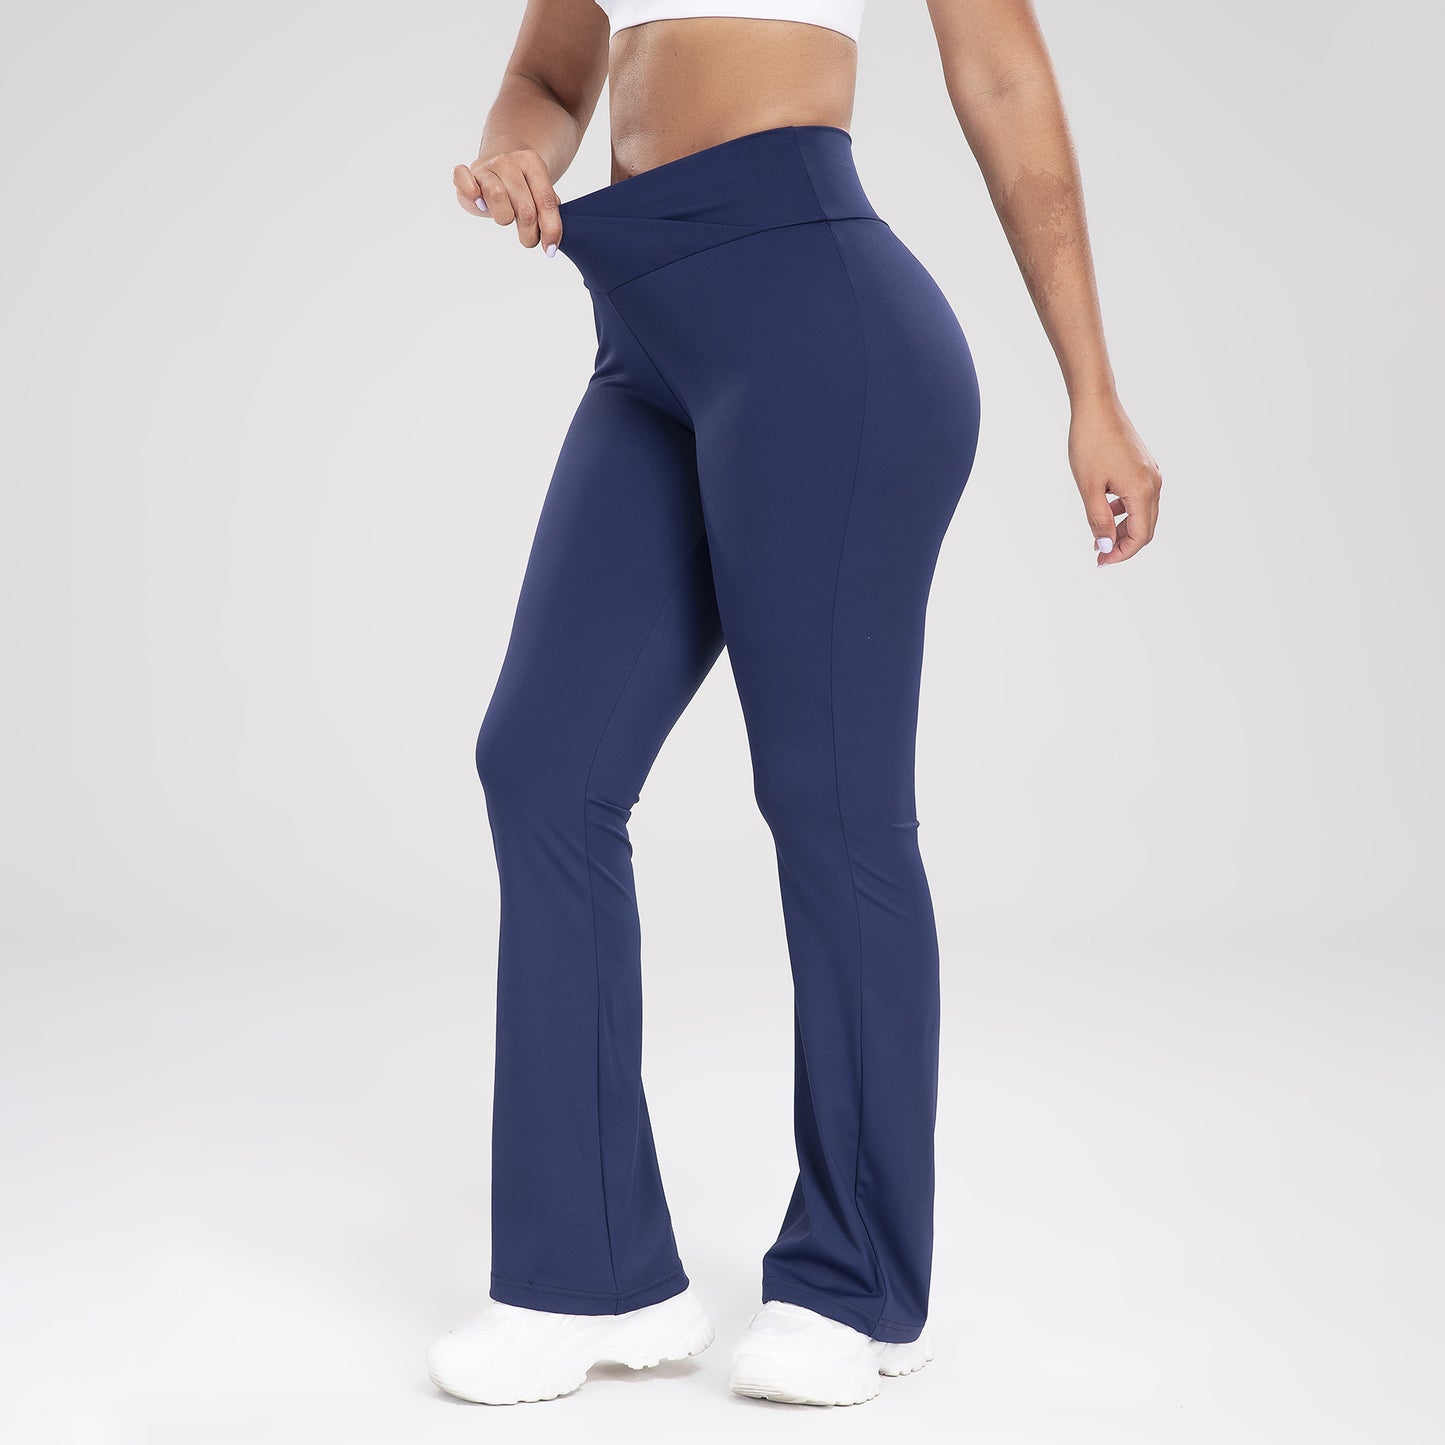 Global Fashion Leisure Sports Bell-bottom Pants Slim Fit Yoga Pants Women